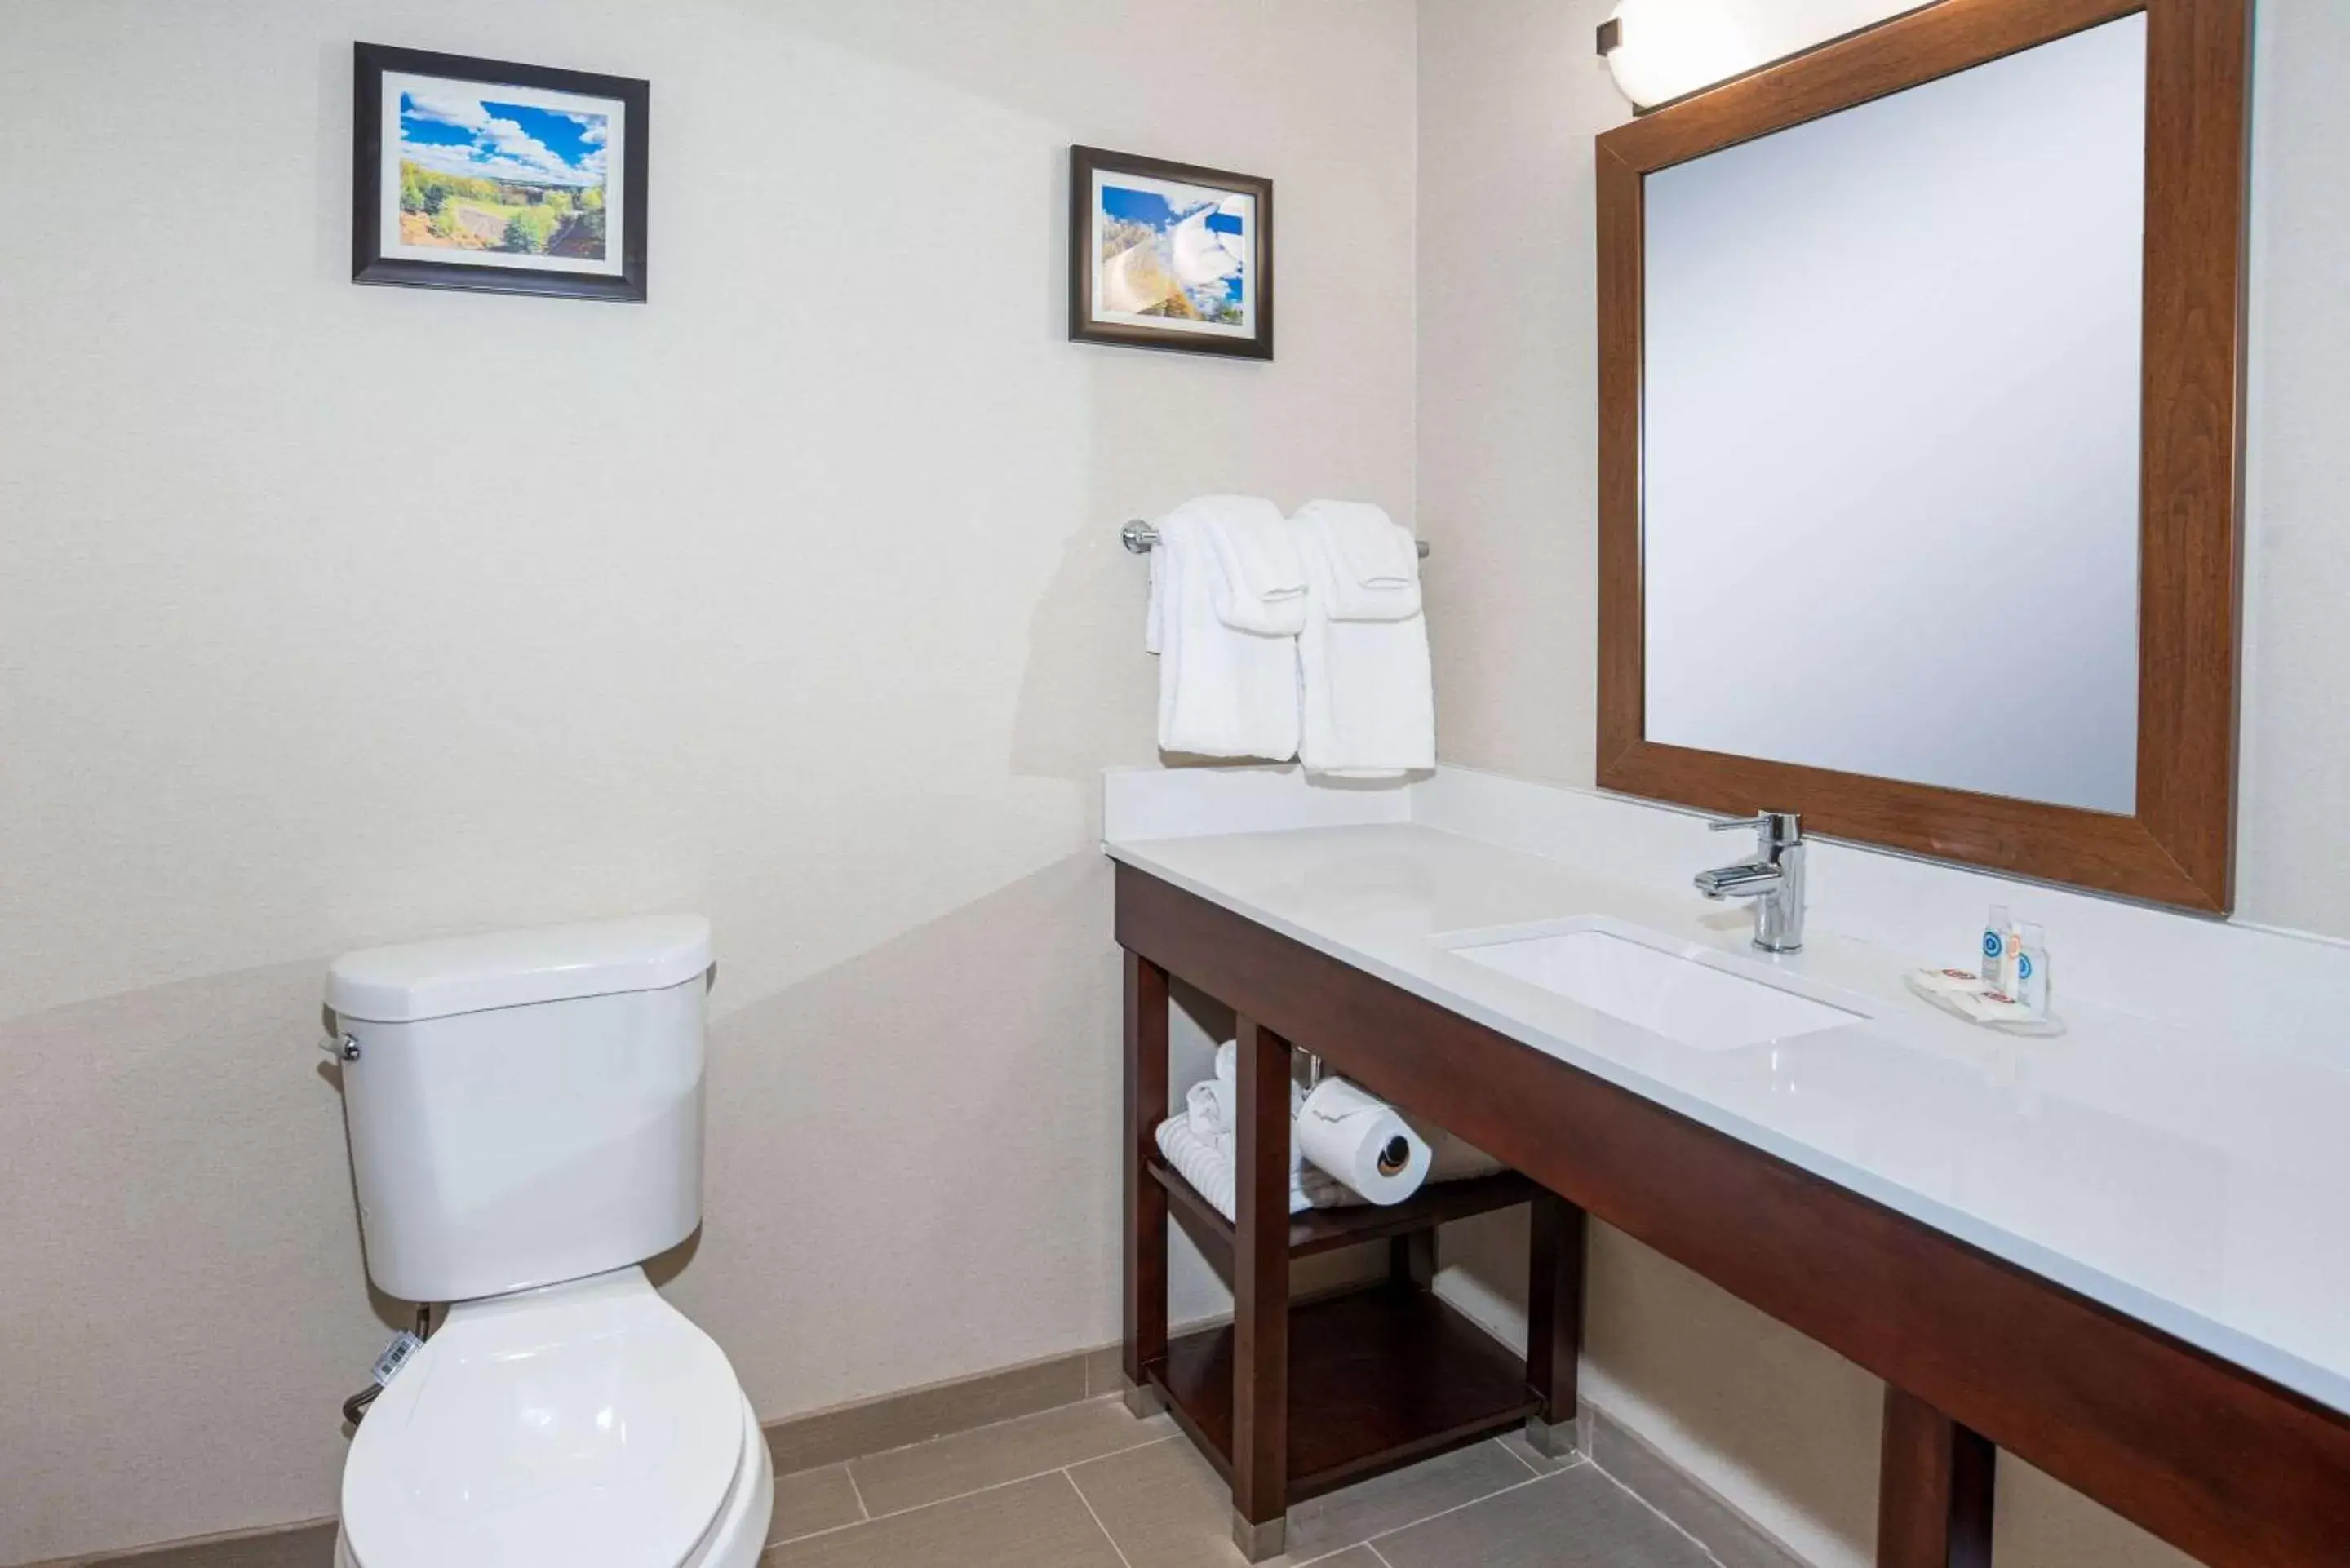 Photo of the whole room, Bathroom in Comfort Inn Naugatuck-Shelton, CT